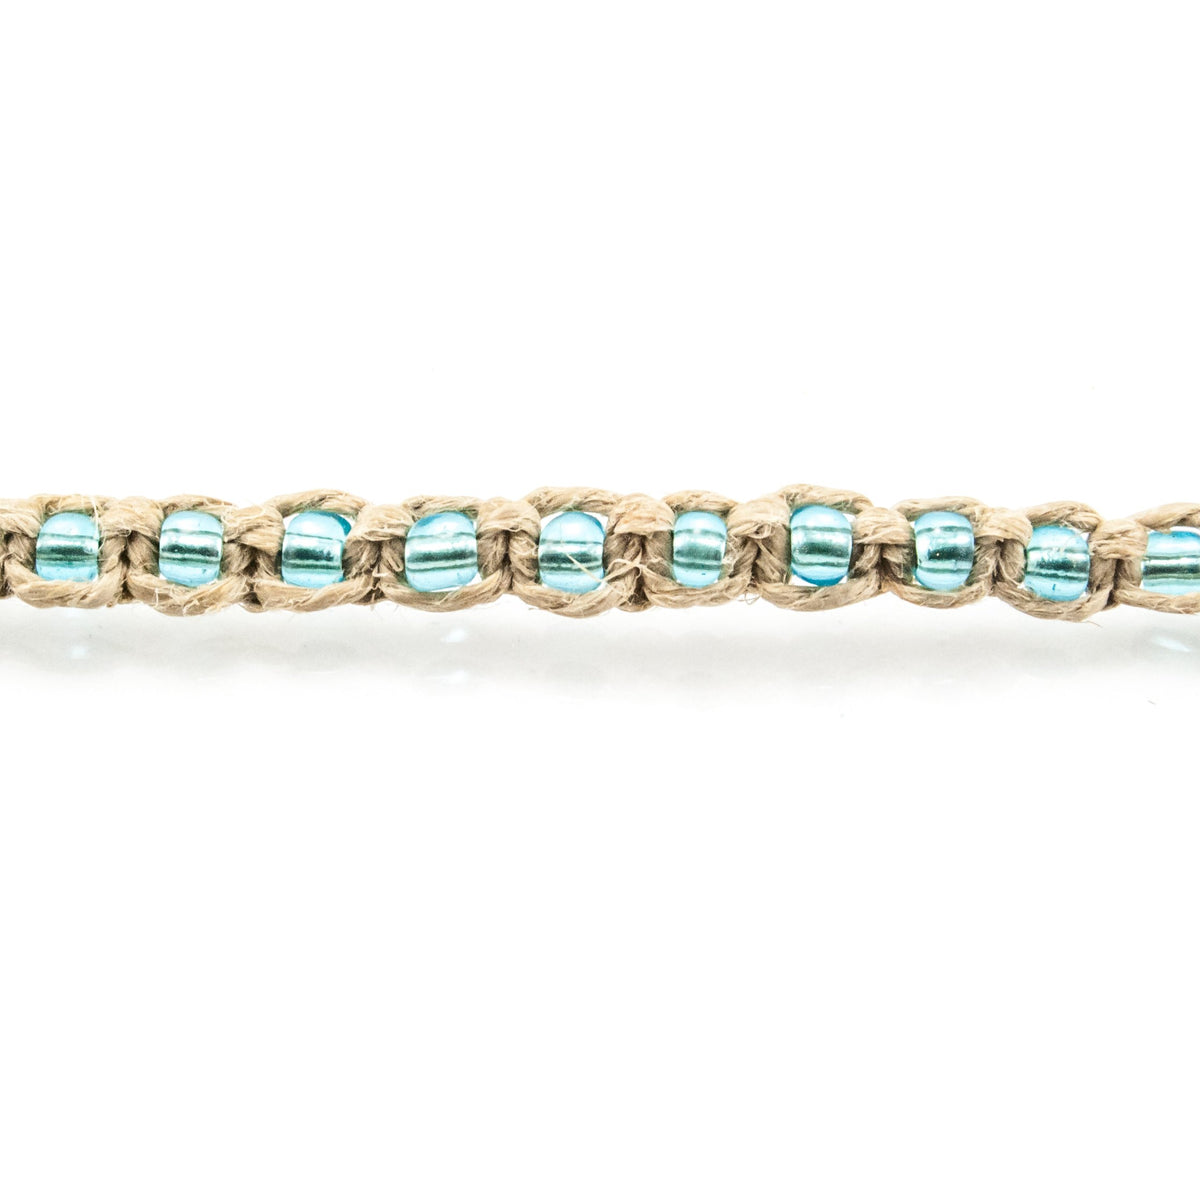 Turquoise Blue Beads on Hemp Anklet Bracelet